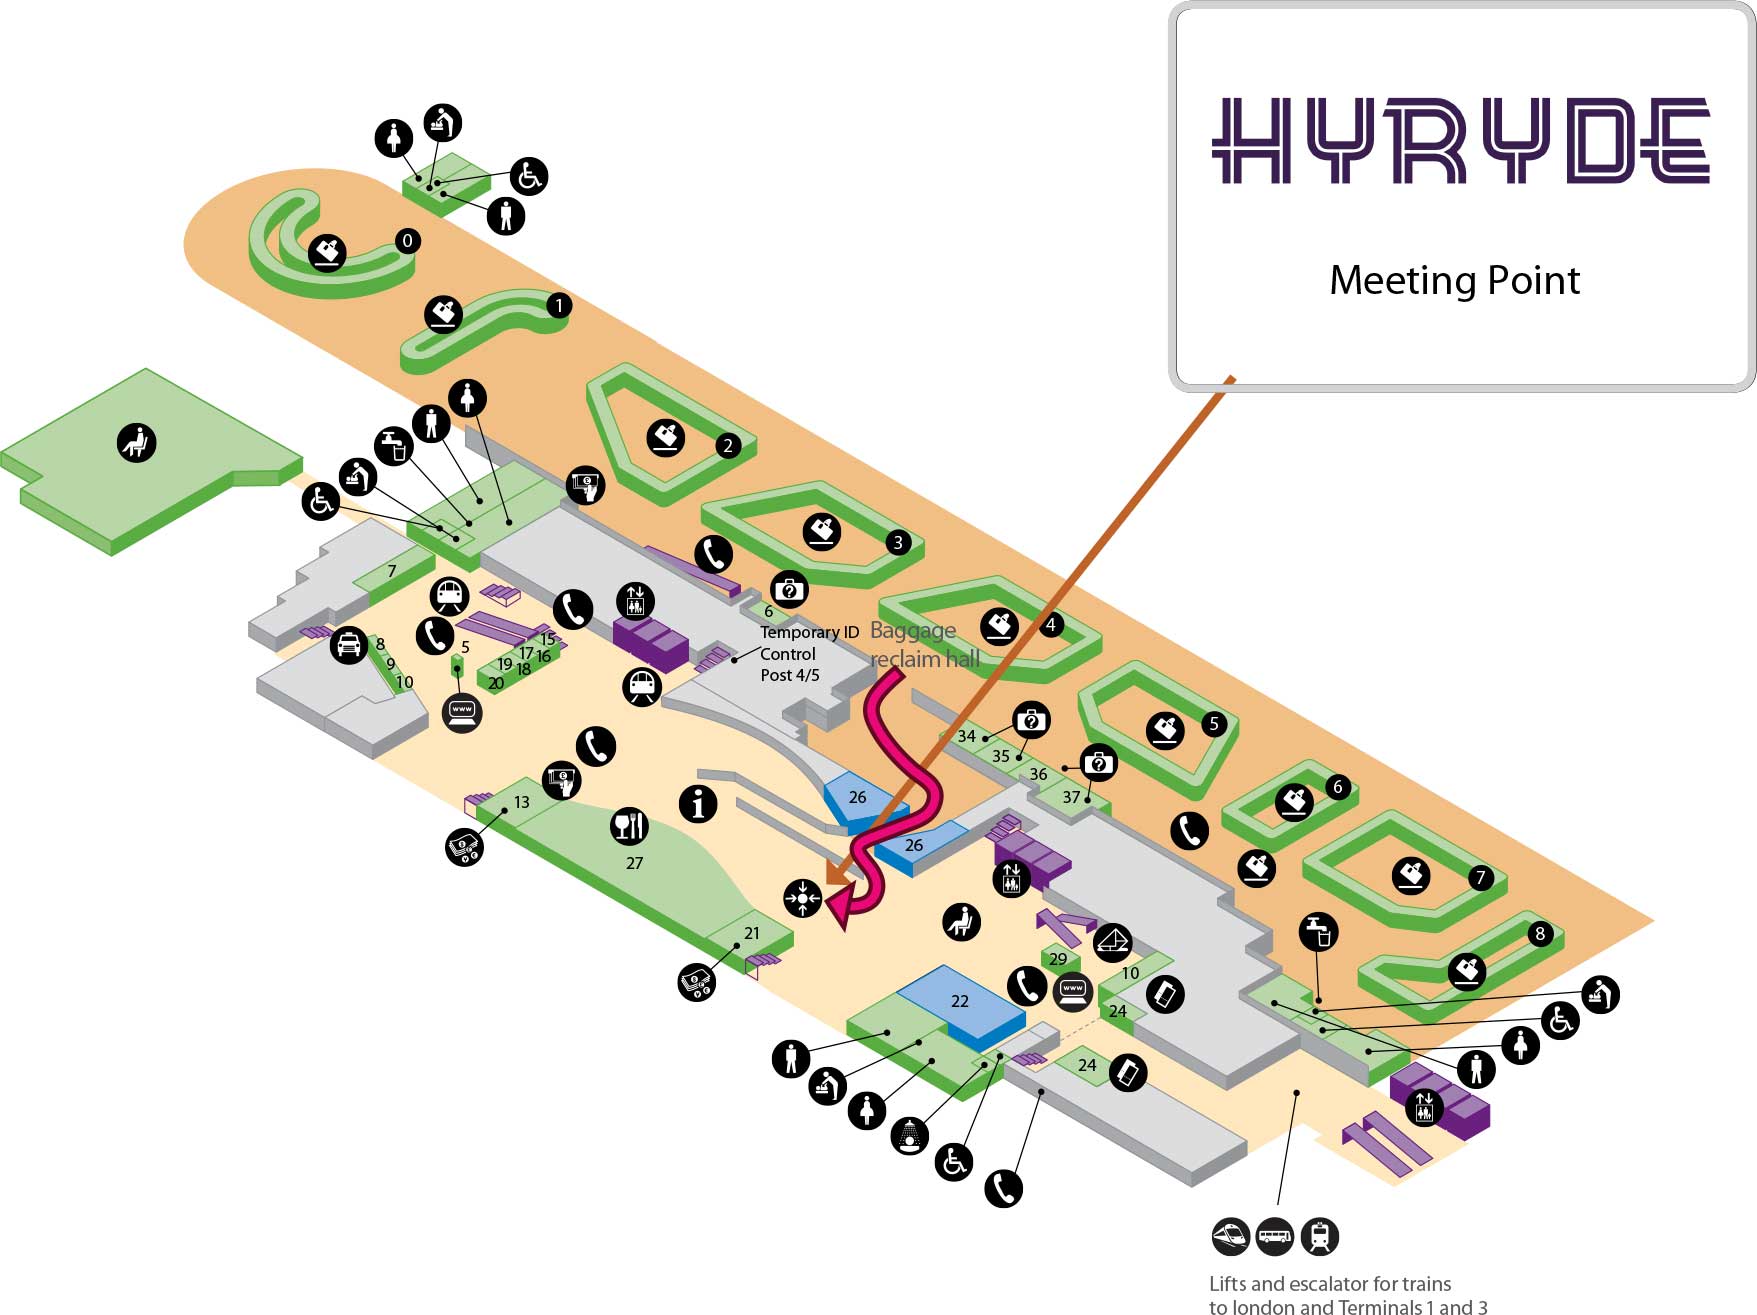 Heathrow Airport HYRYDE Meeting Point